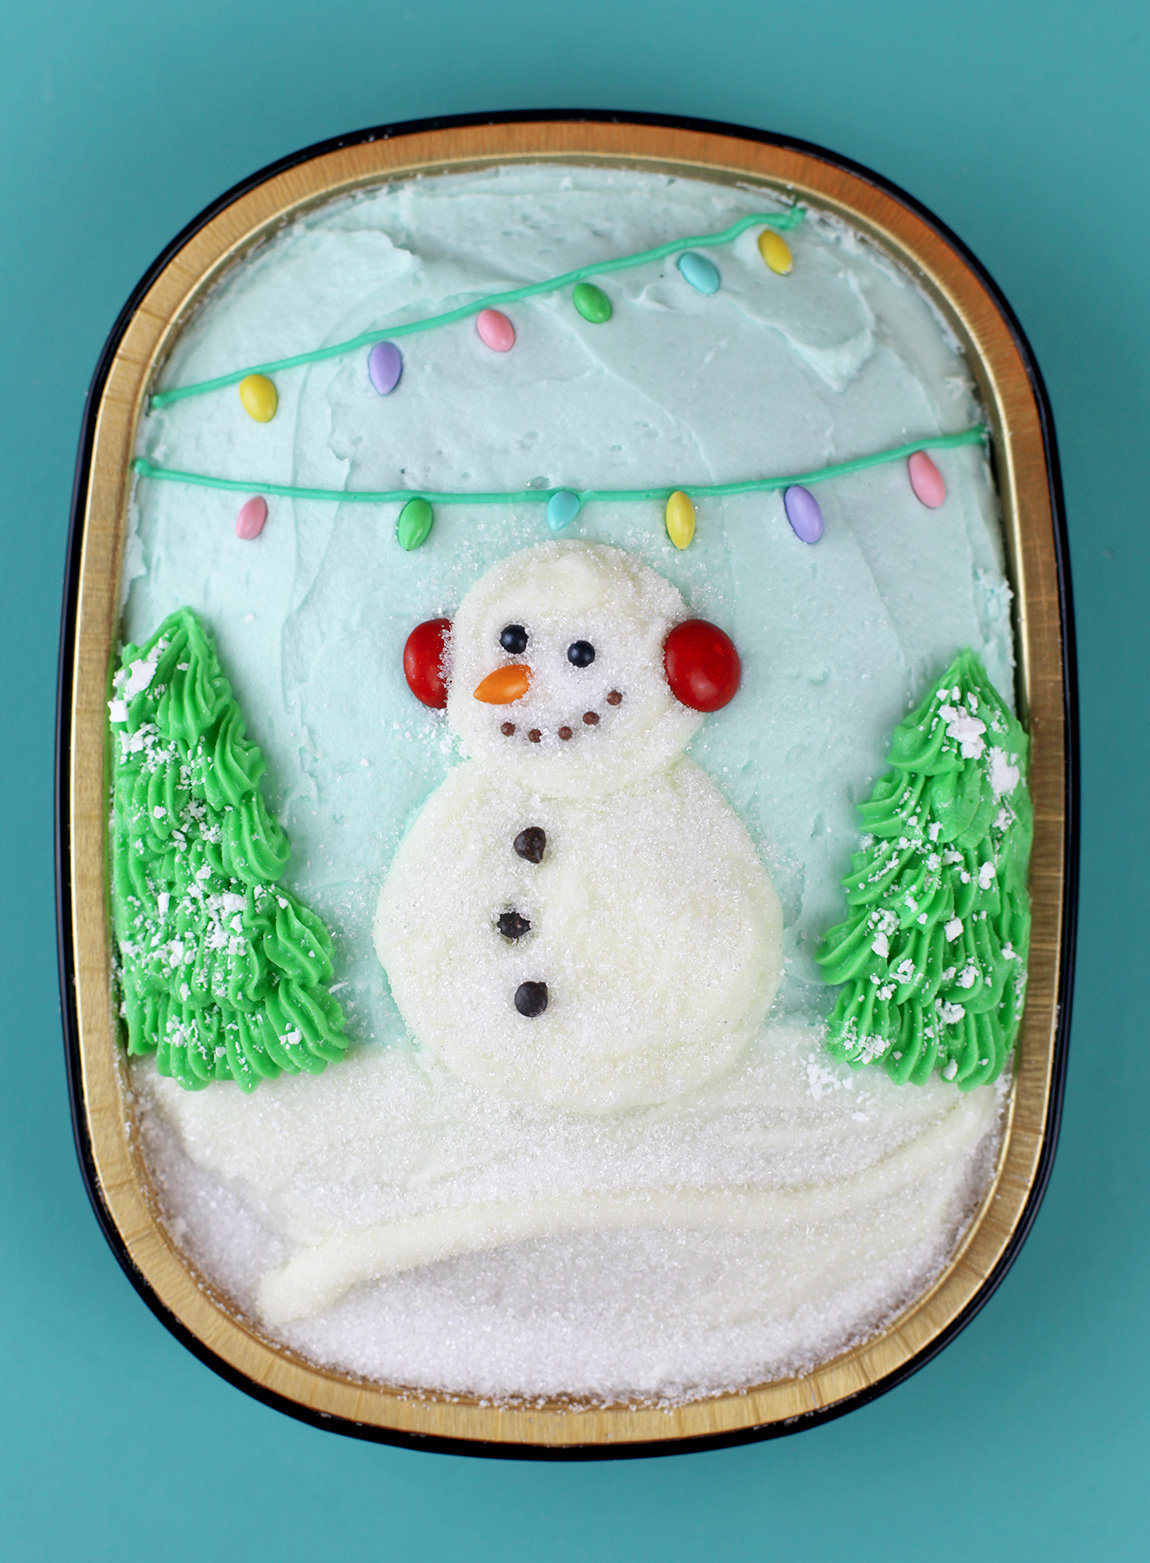 Snowman Snack Cake